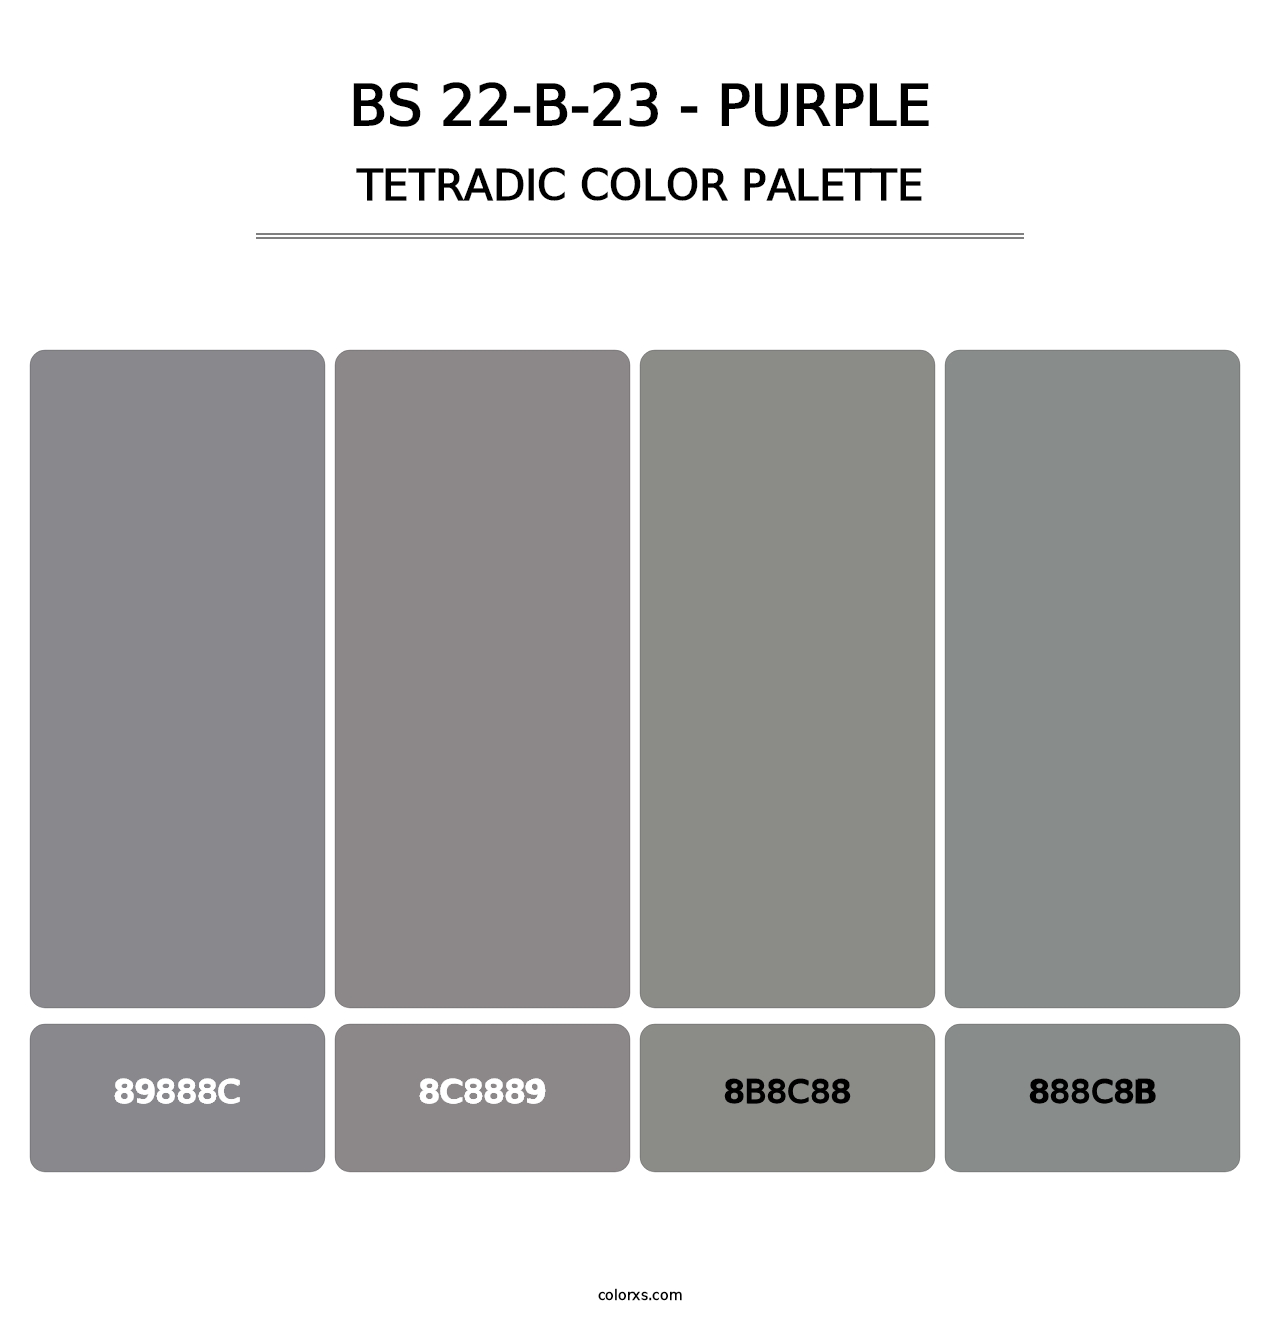 BS 22-B-23 - Purple - Tetradic Color Palette